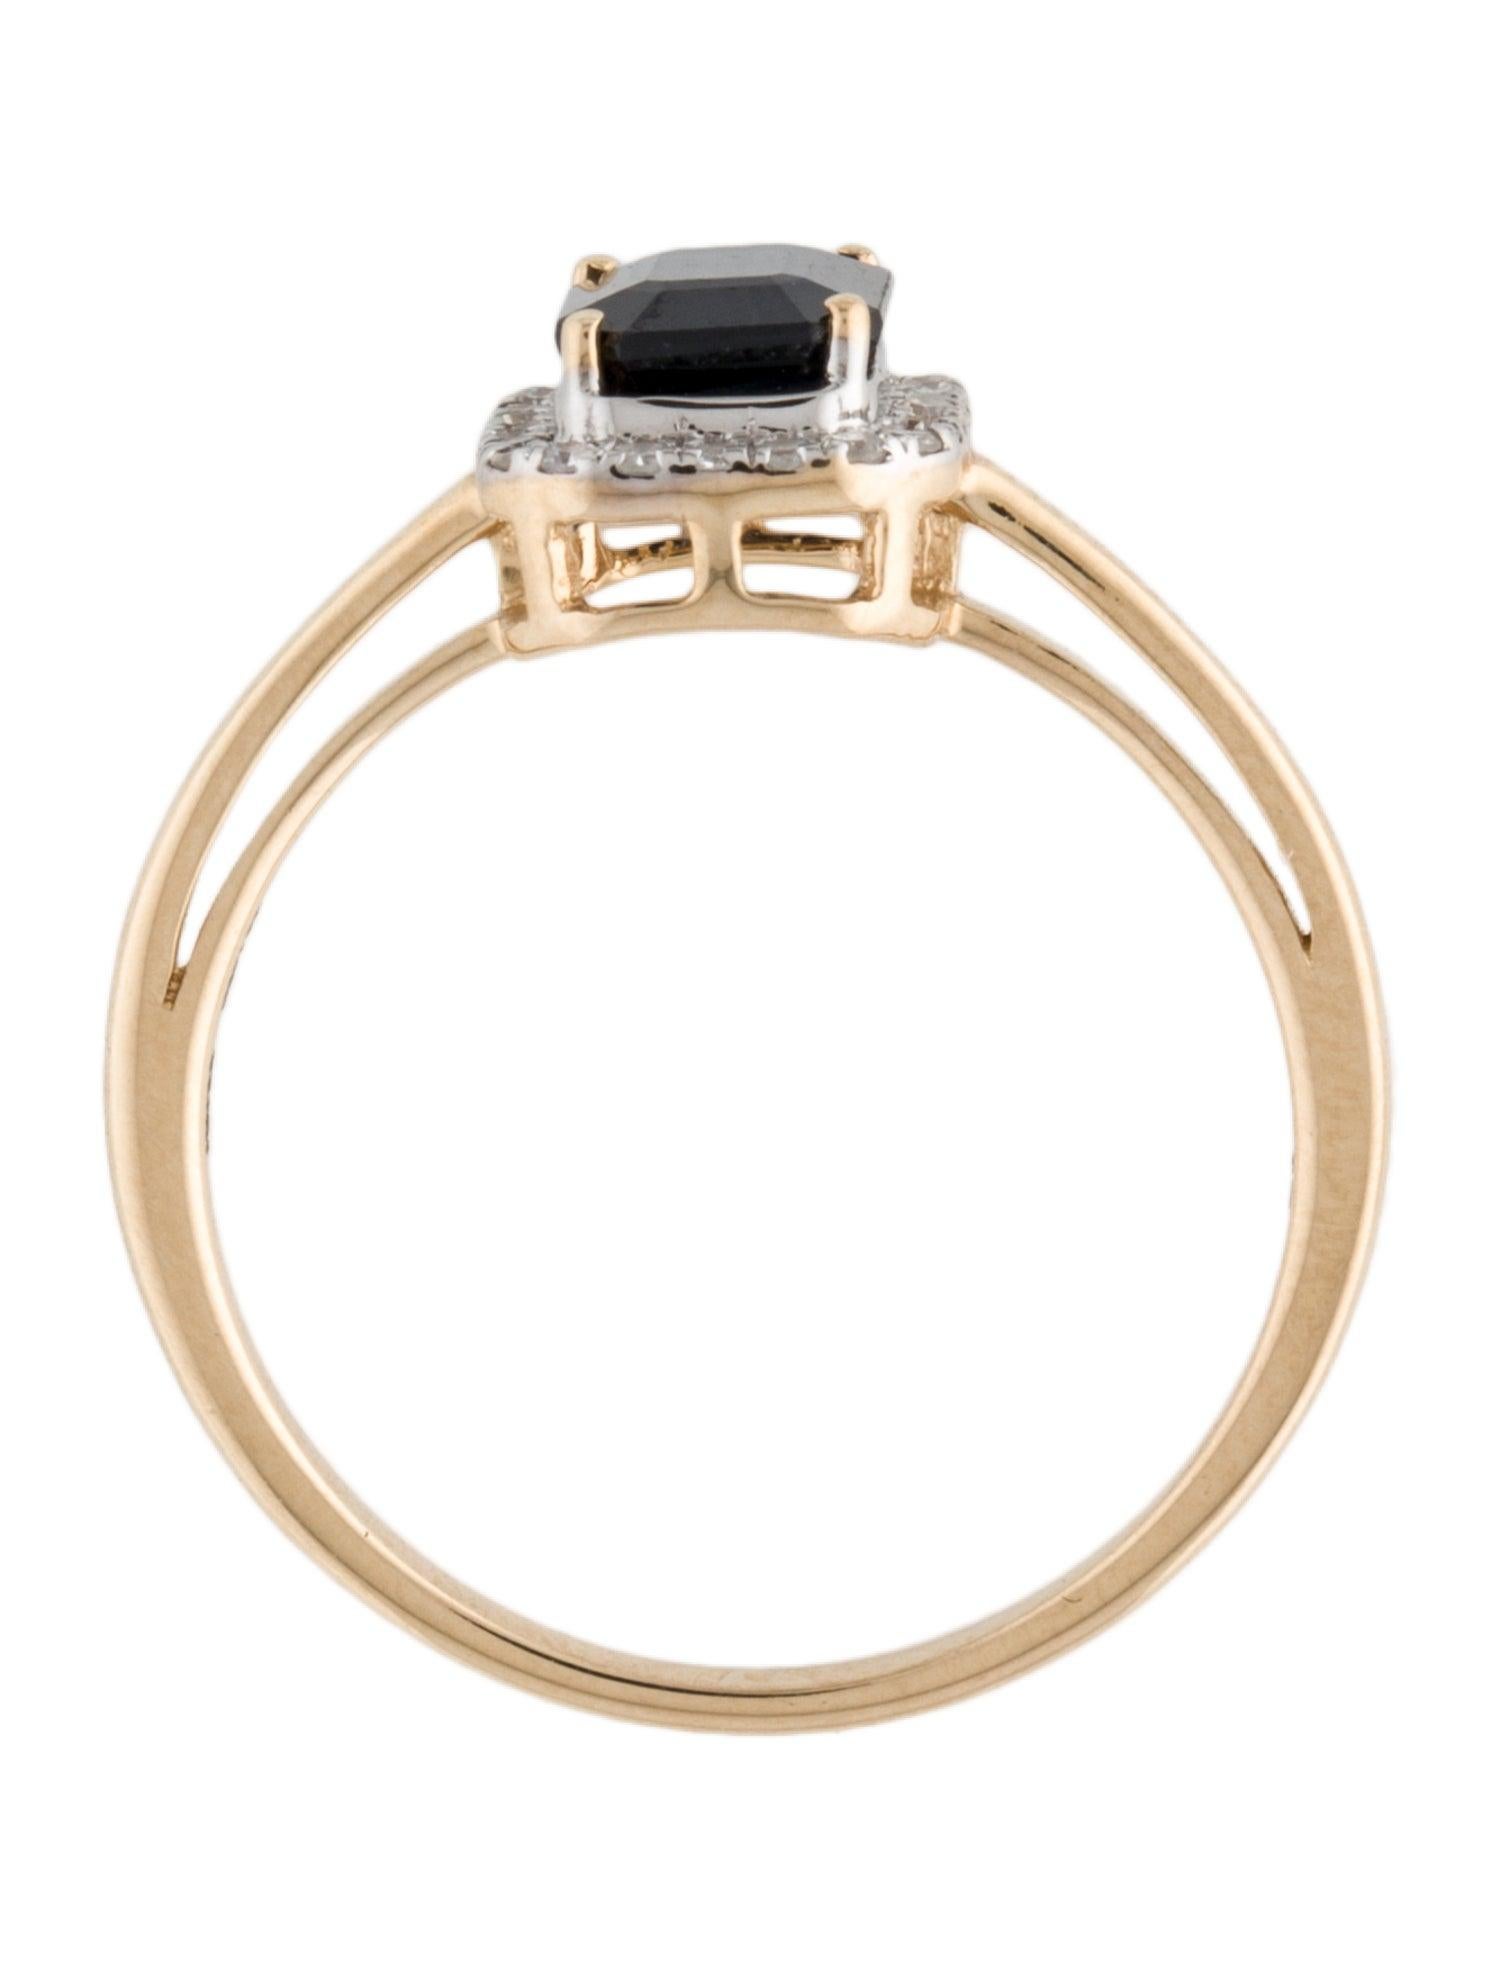 Elegant 14K Yellow Gold Emerald Cut Sapphire & Diamond Cocktail Ring, 1.11ctw 1